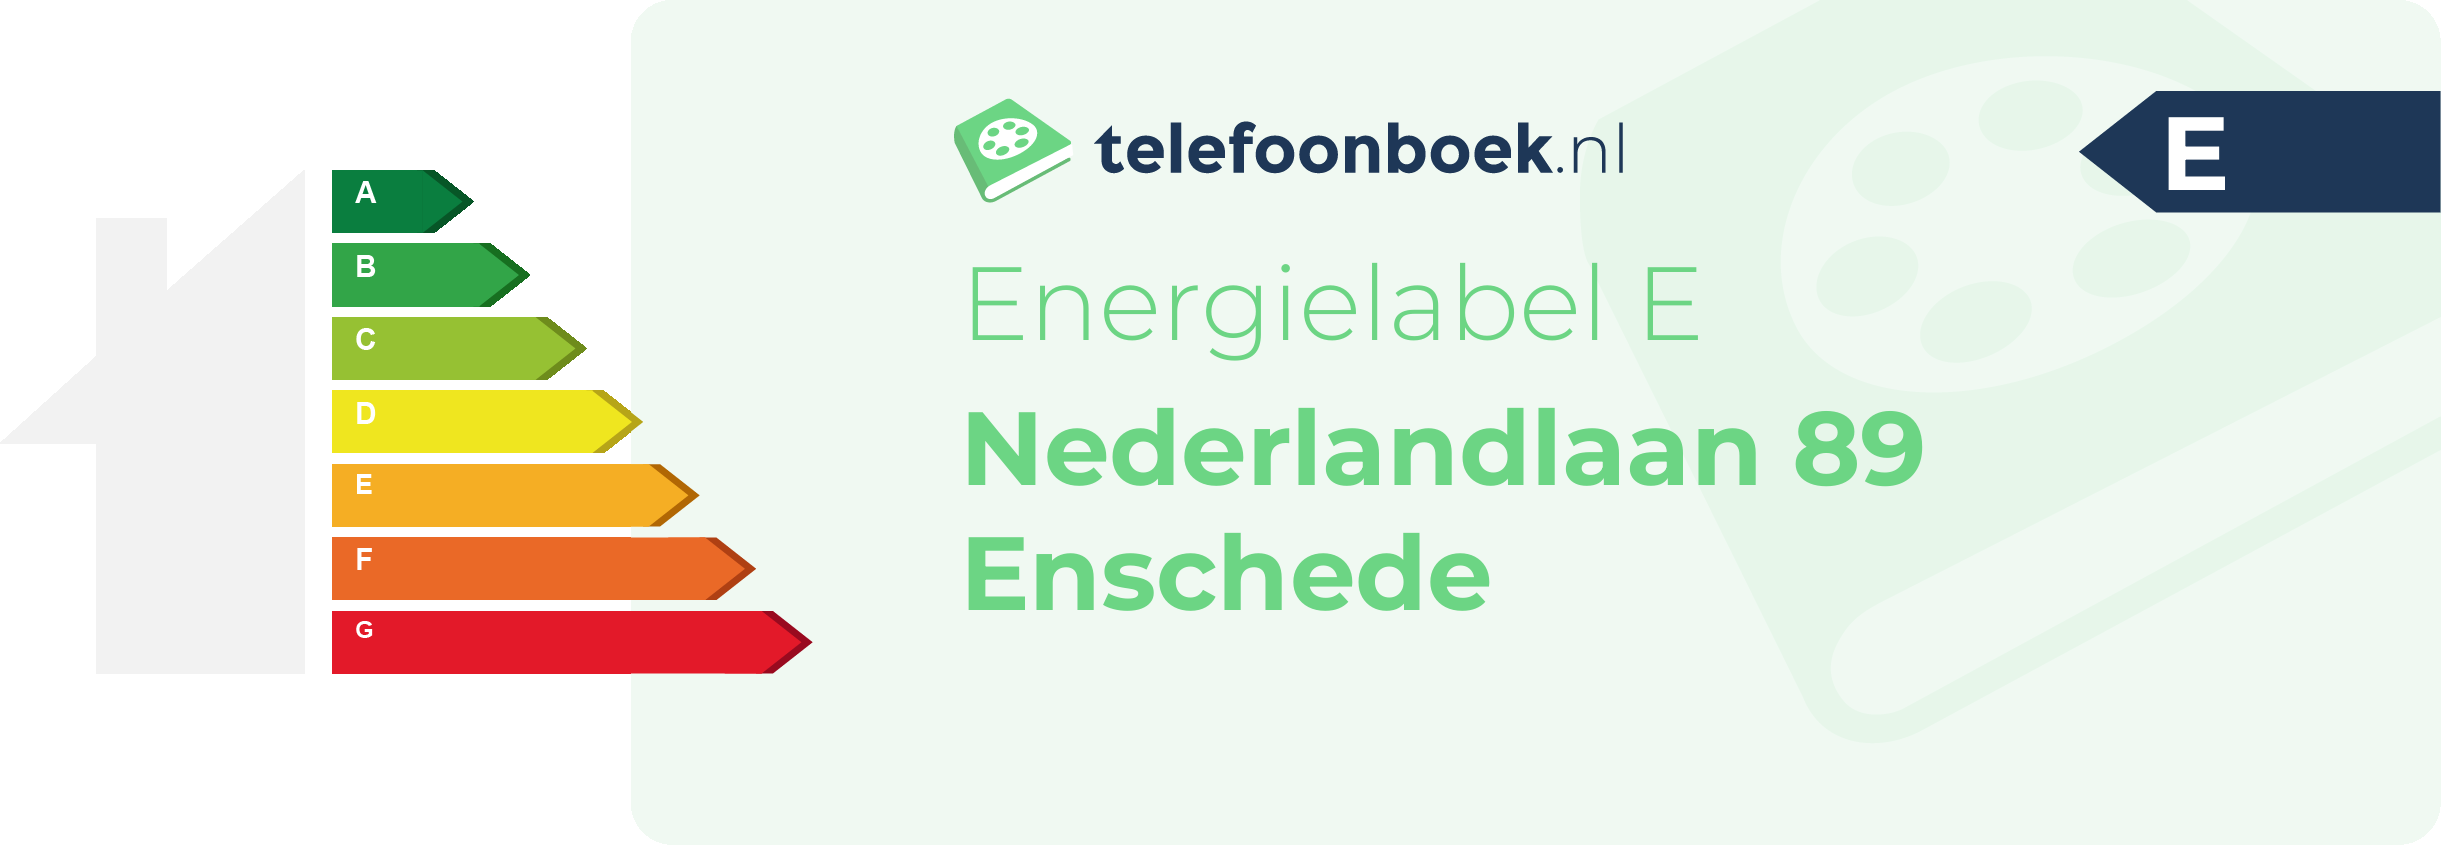 Energielabel Nederlandlaan 89 Enschede